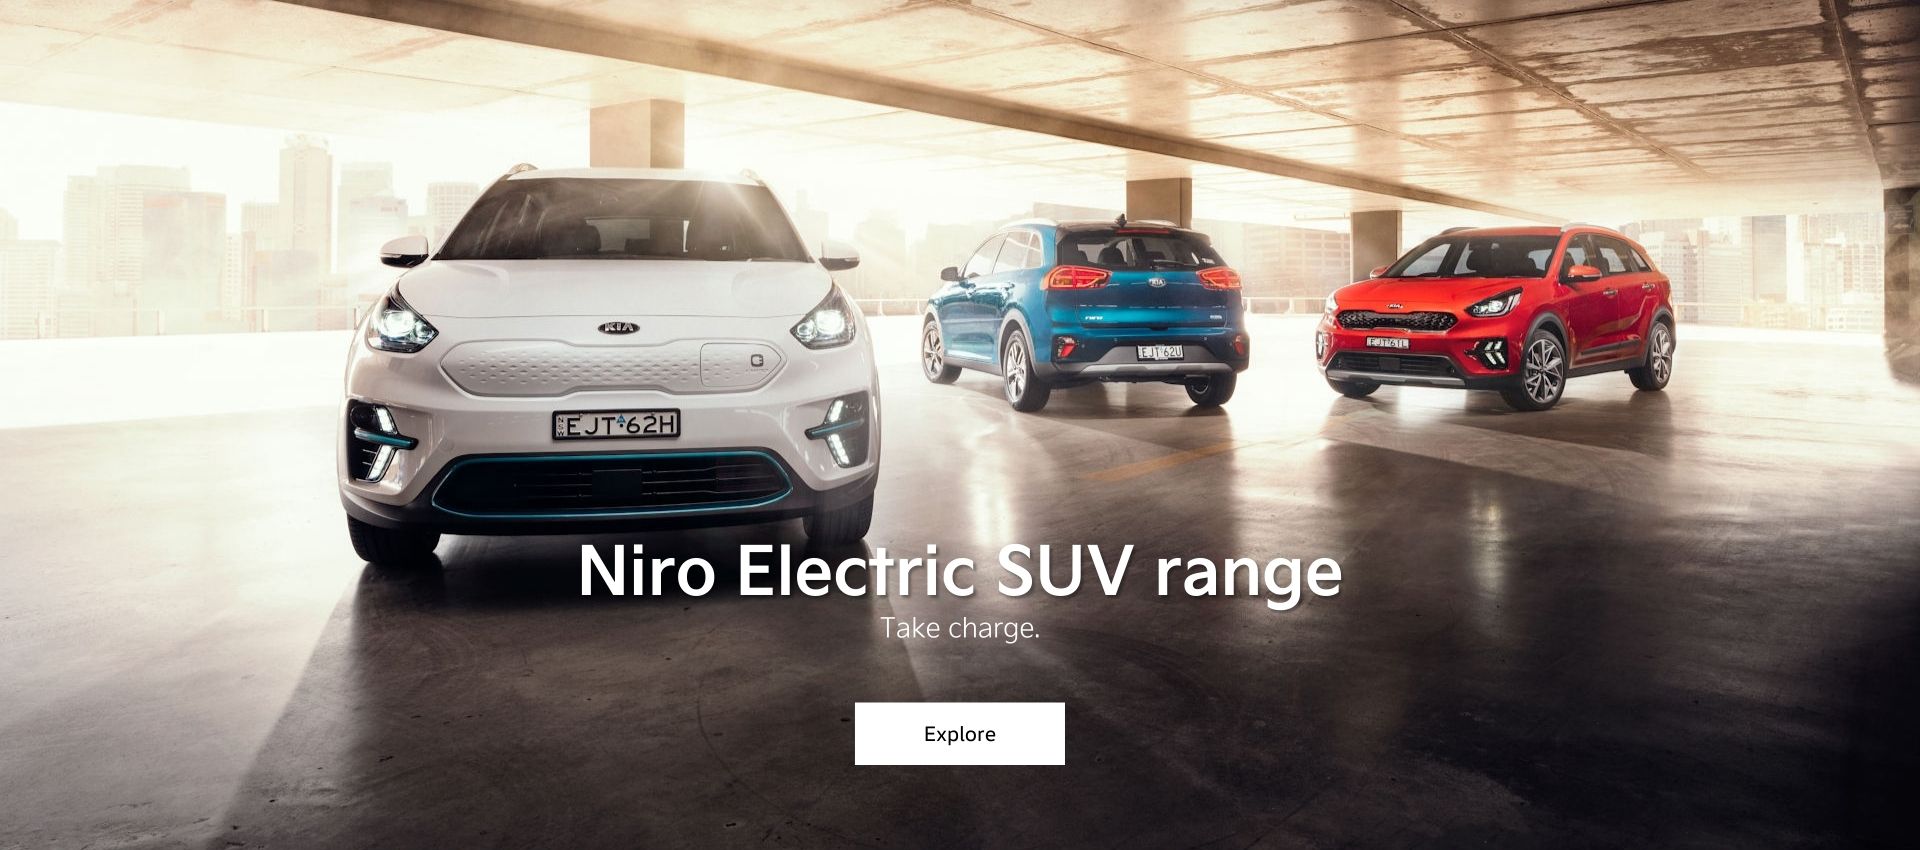 Niro Electric SUV range